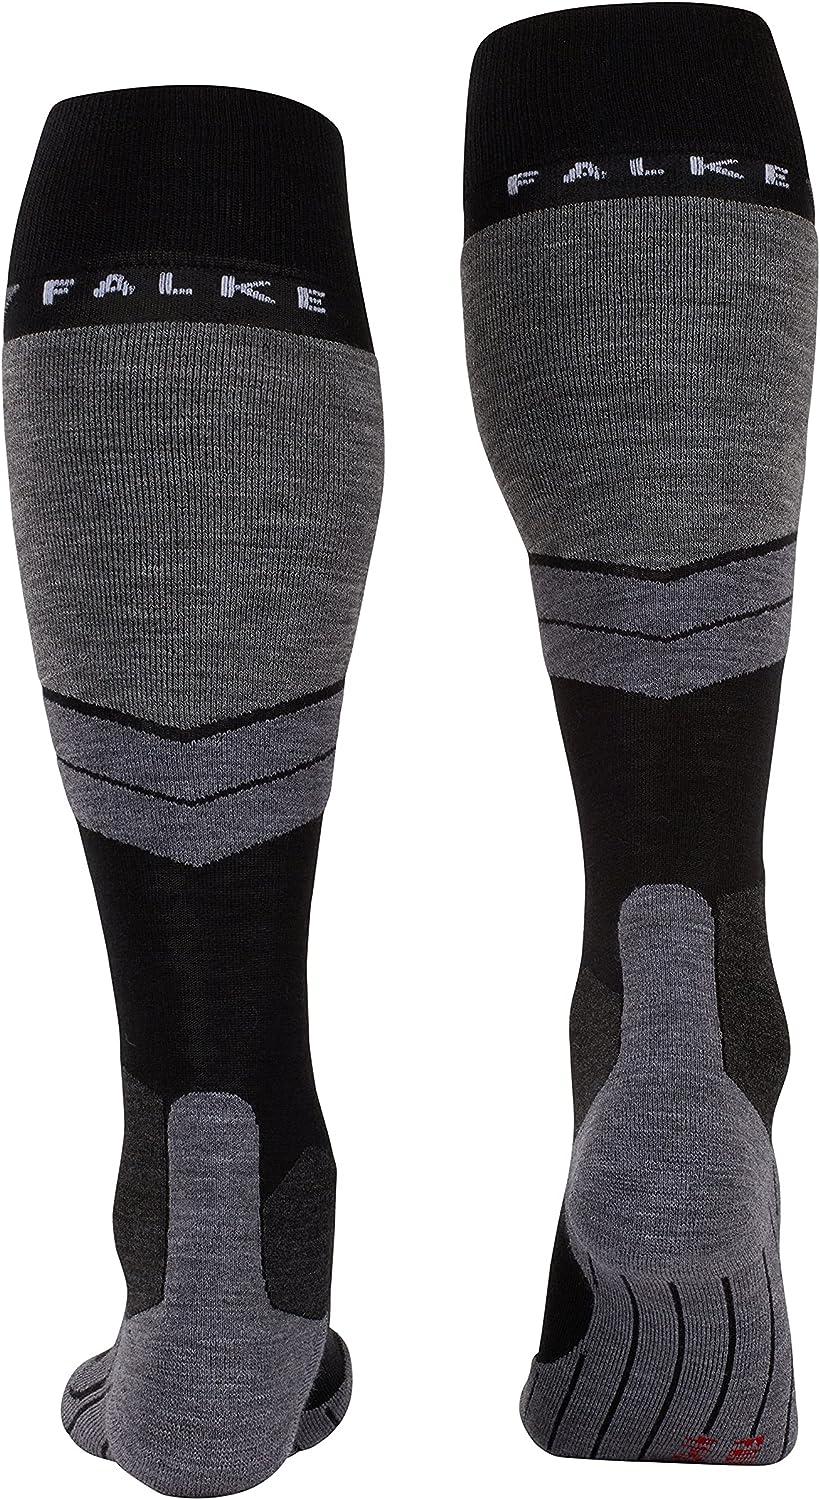 FALKE Women's SK4 Ski Socks, Merino Wool, Knee High, Light Cushion, Breathable  Quick Dry, Winter Athletic Sock, 1 Pair 8-9 Black (Black-mix 3010)